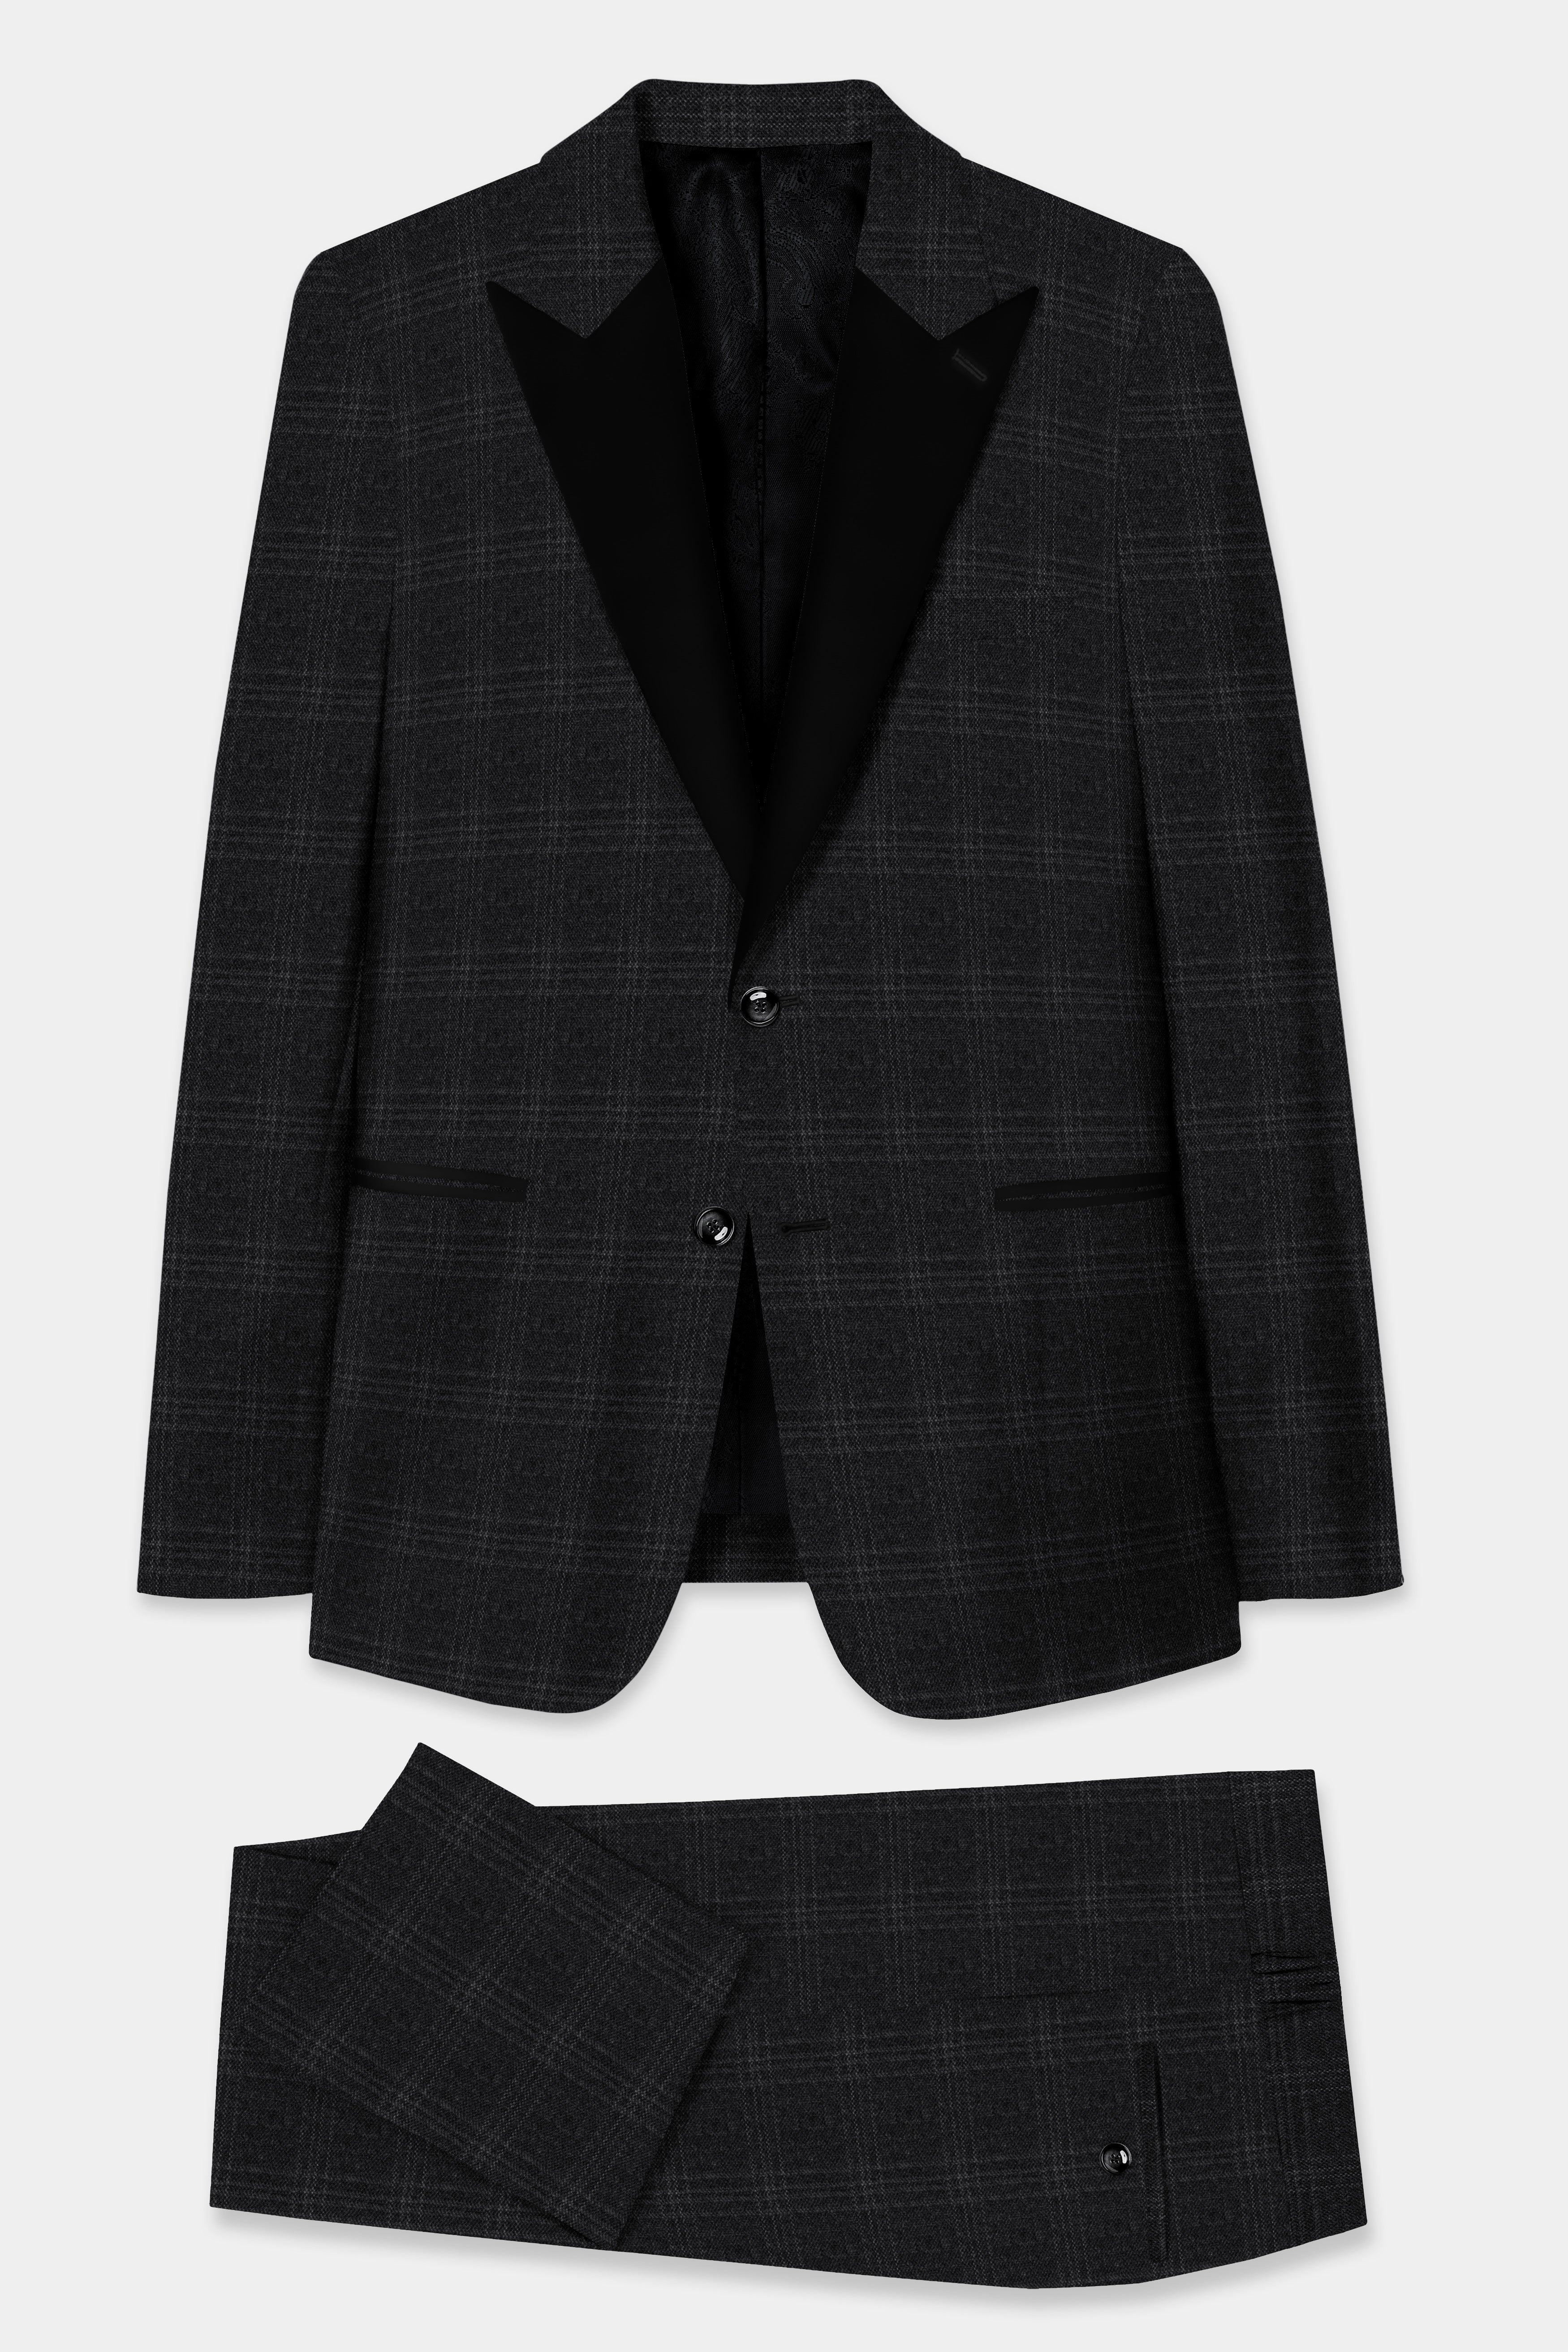 Shark Black Windowpane Wool Rich Peak Collar Tuxedo Suit